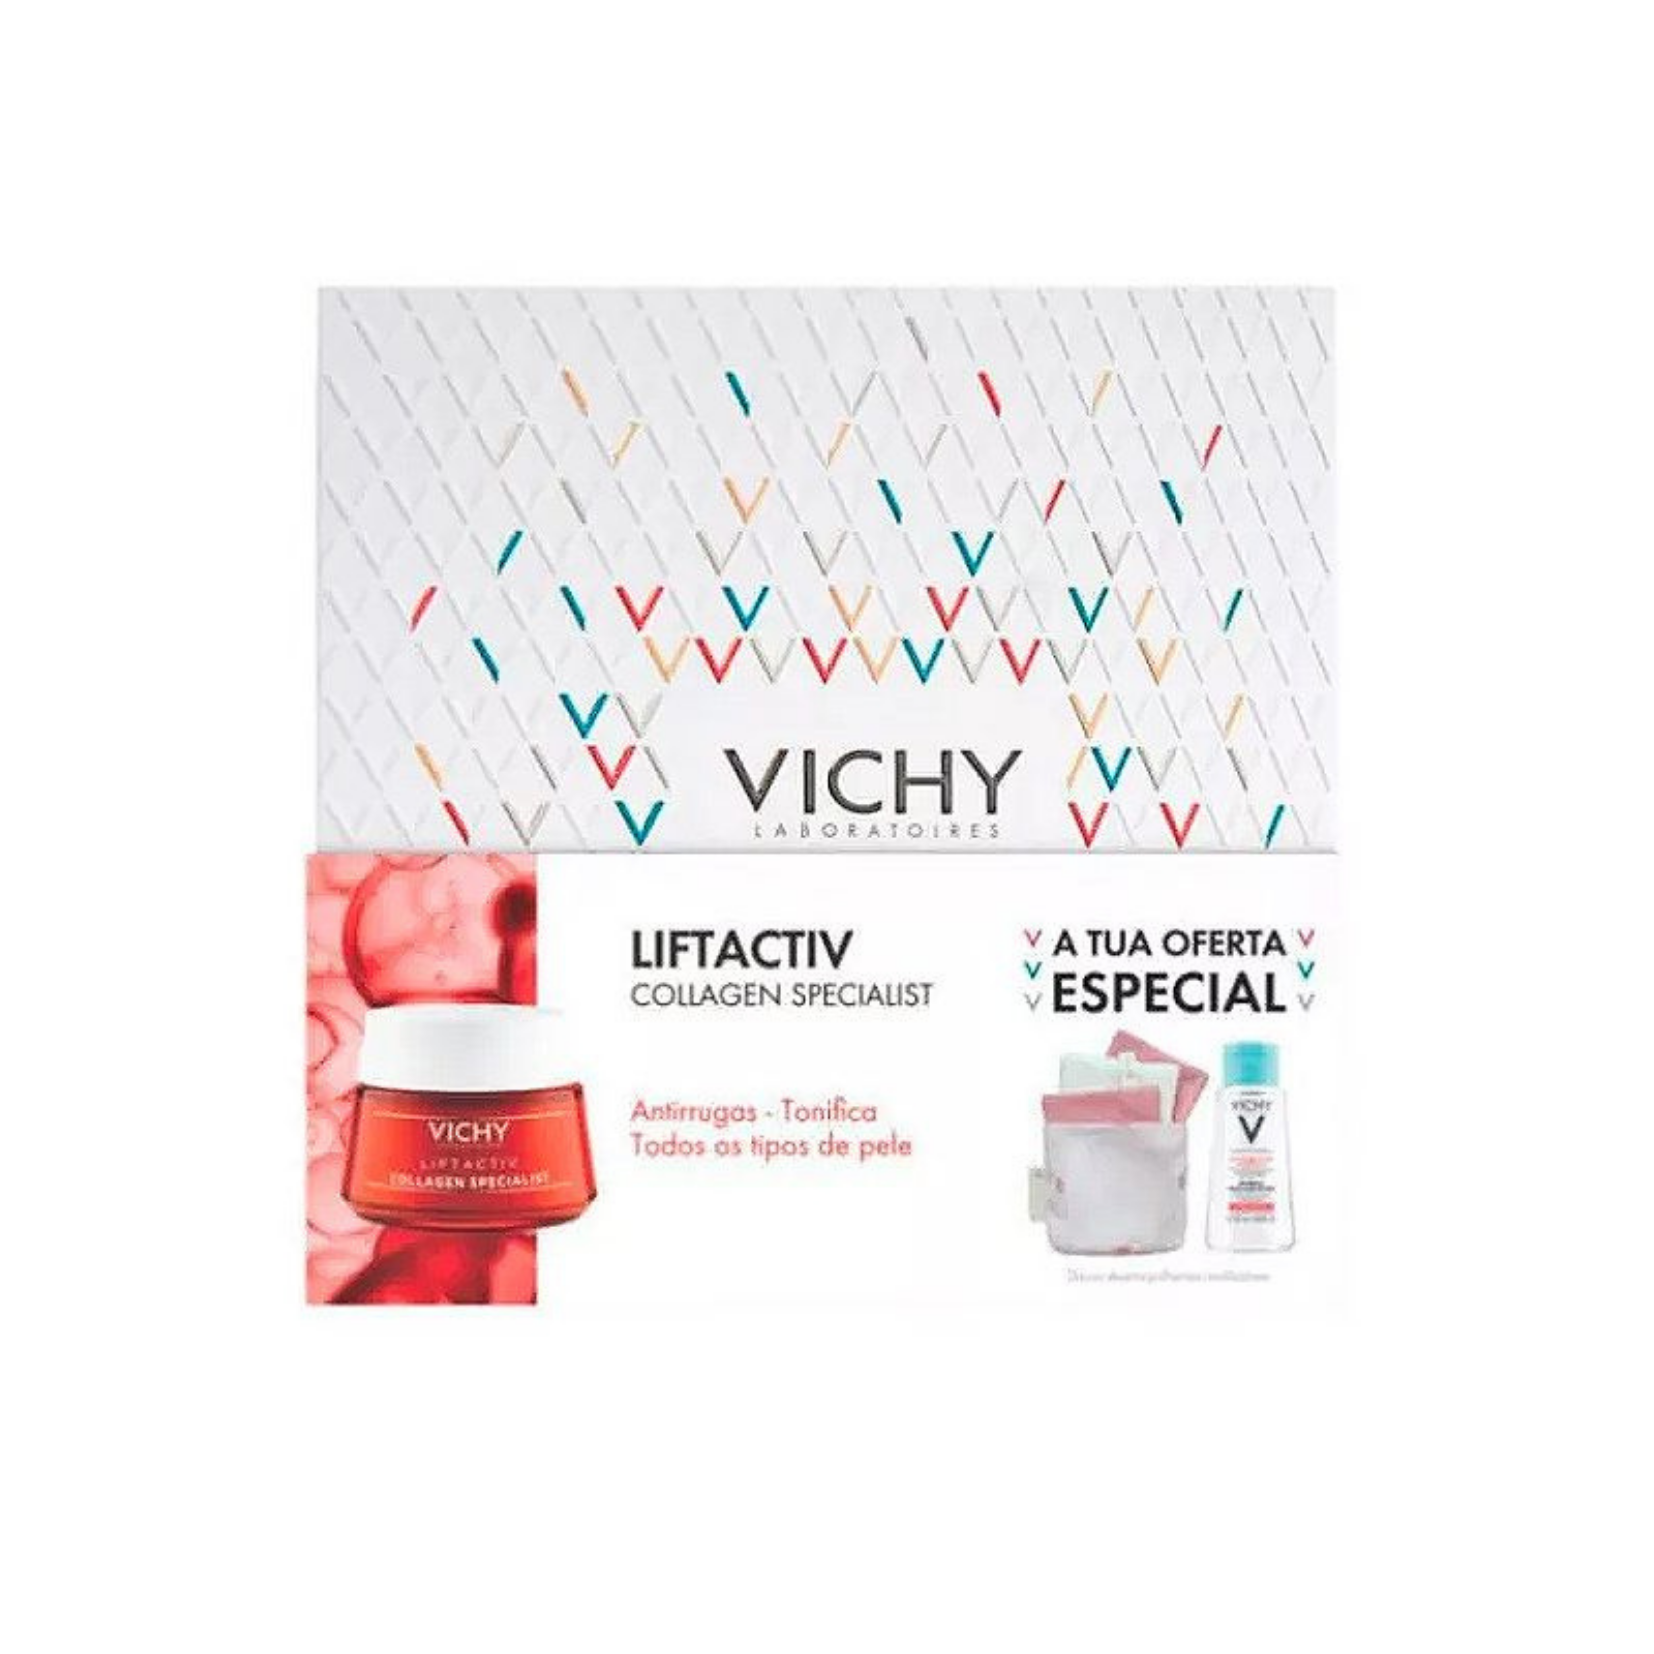 Vichy Liftactiv Collagen Specialist Coffret